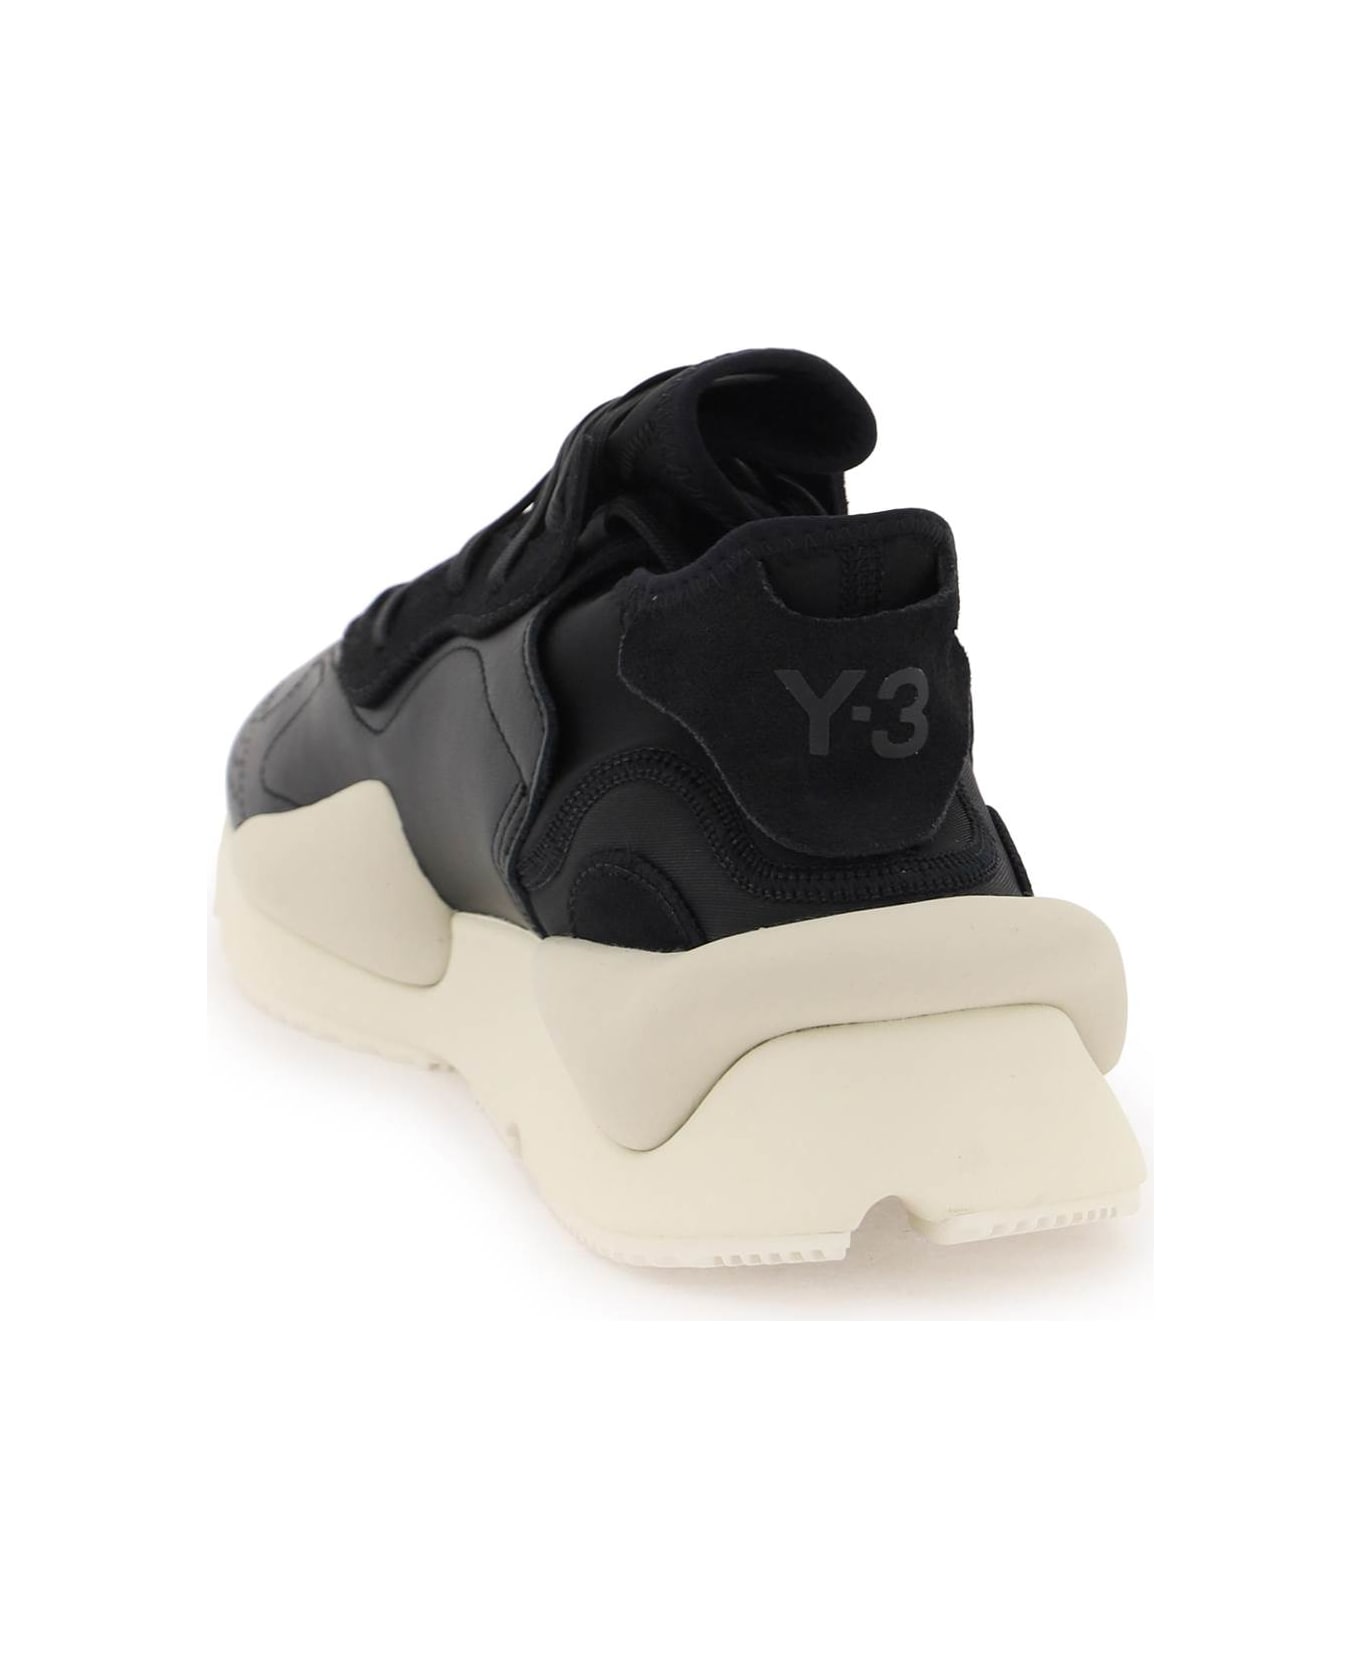 Y-3 Kaiwa Sneakers - BLACK OWHITE CBROWN (Black)